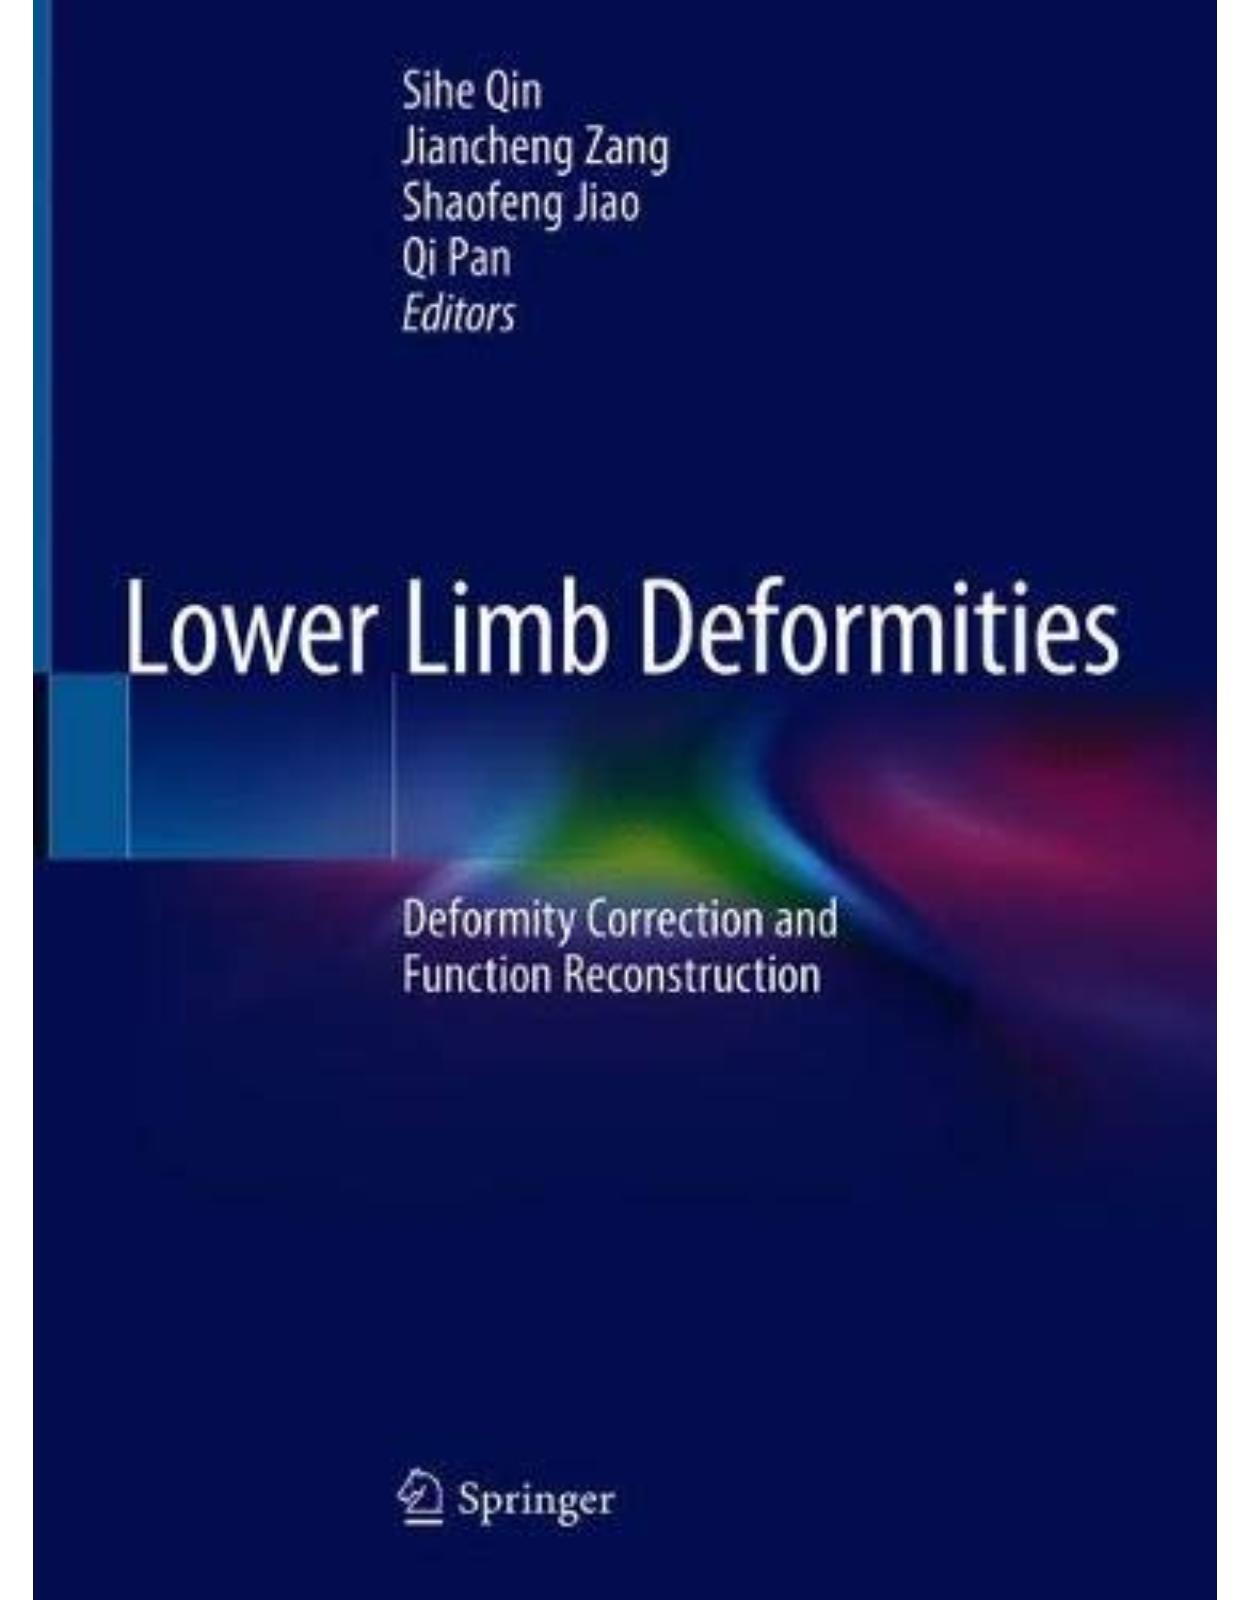 Lower Limb Deformities: Deformity Correction and Function Reconstruction